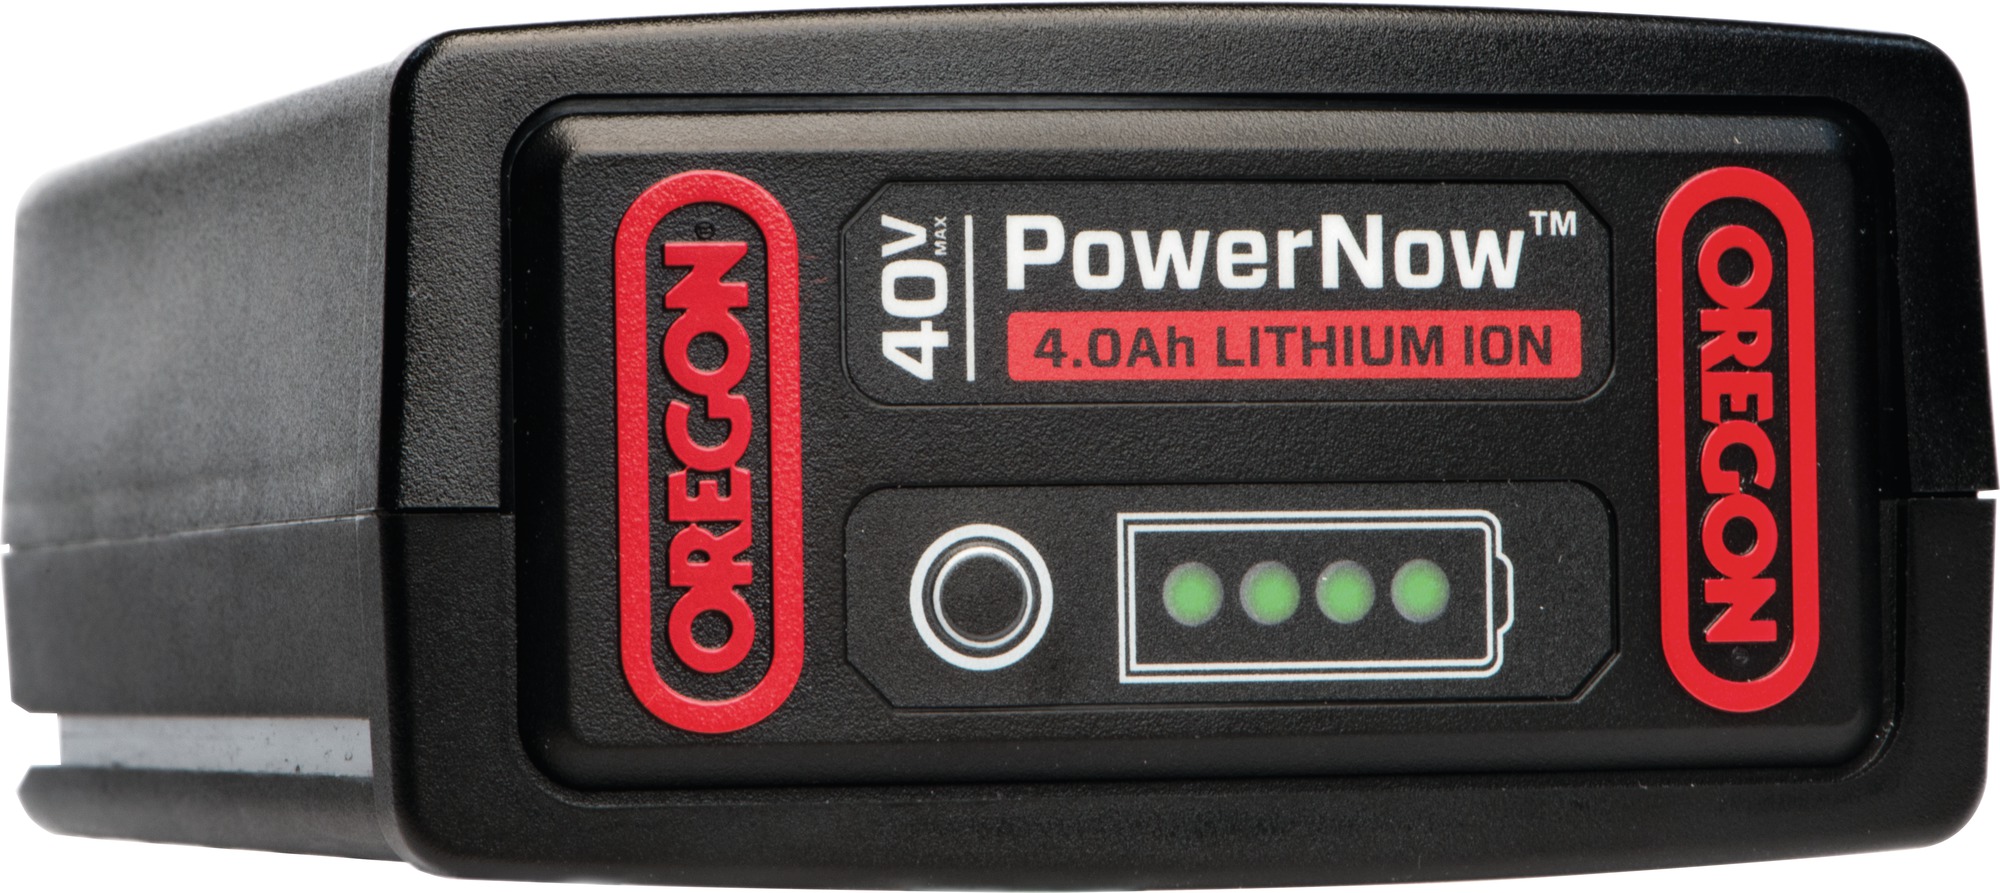 Batterie PowerNow - B742E - Oregon -Lithium ion - 4.0Ah